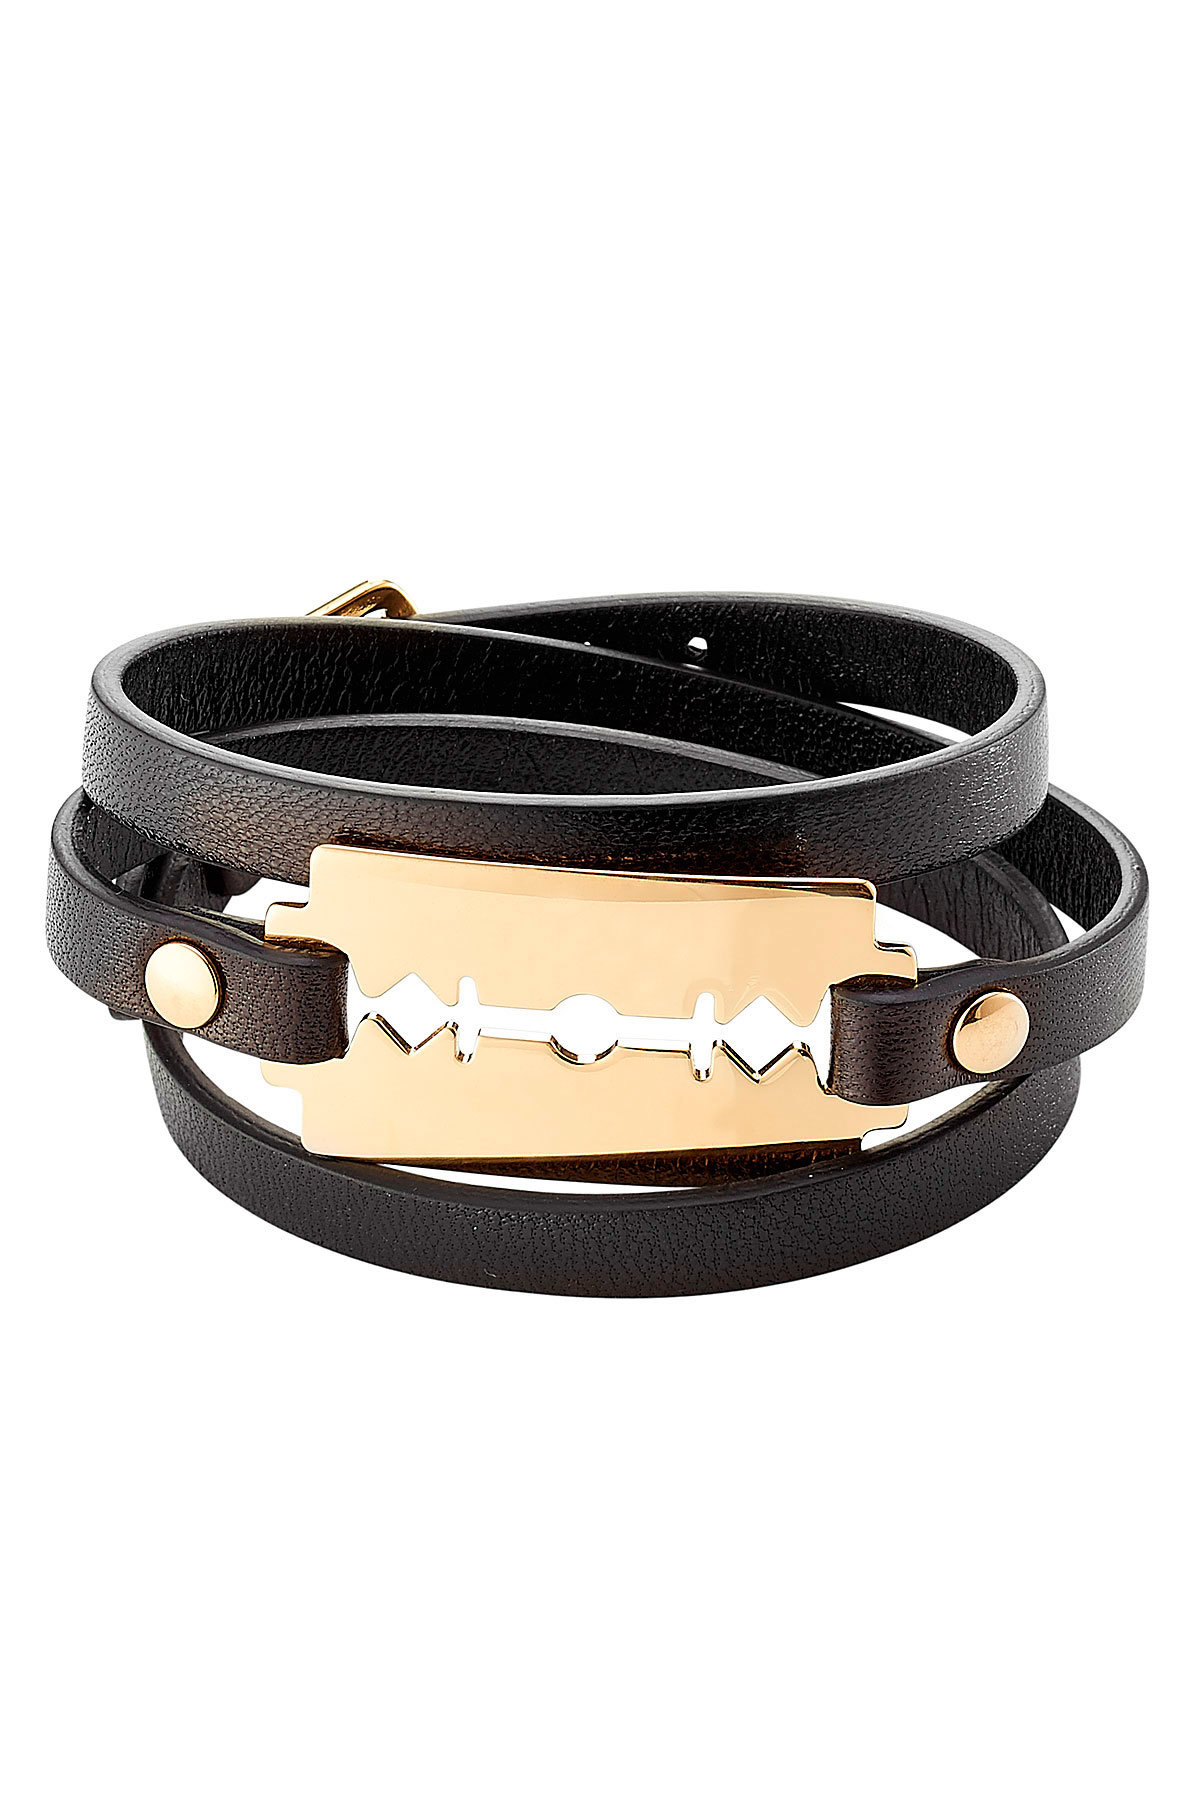 McQ Alexander McQueen - Leather Bracelet with Razor Blade Motif